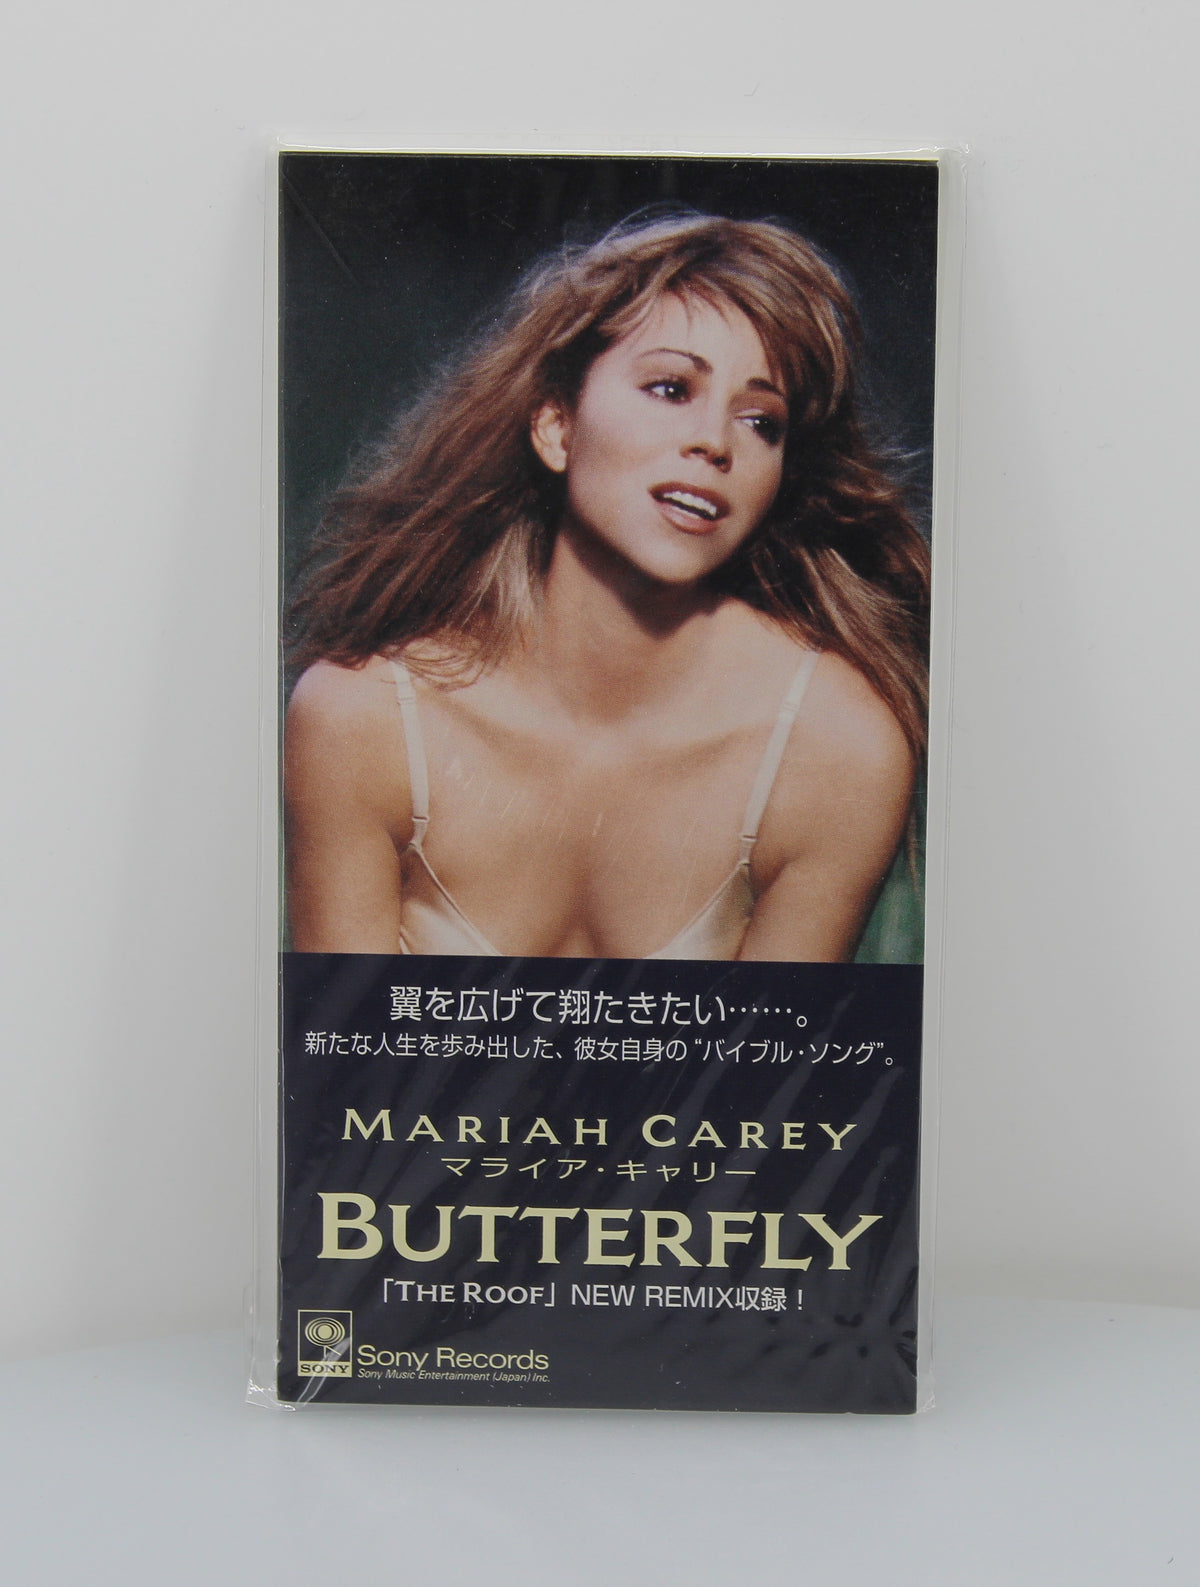 Mariah Carey – Butterfly, CD, Mini, Single, Japan 1997